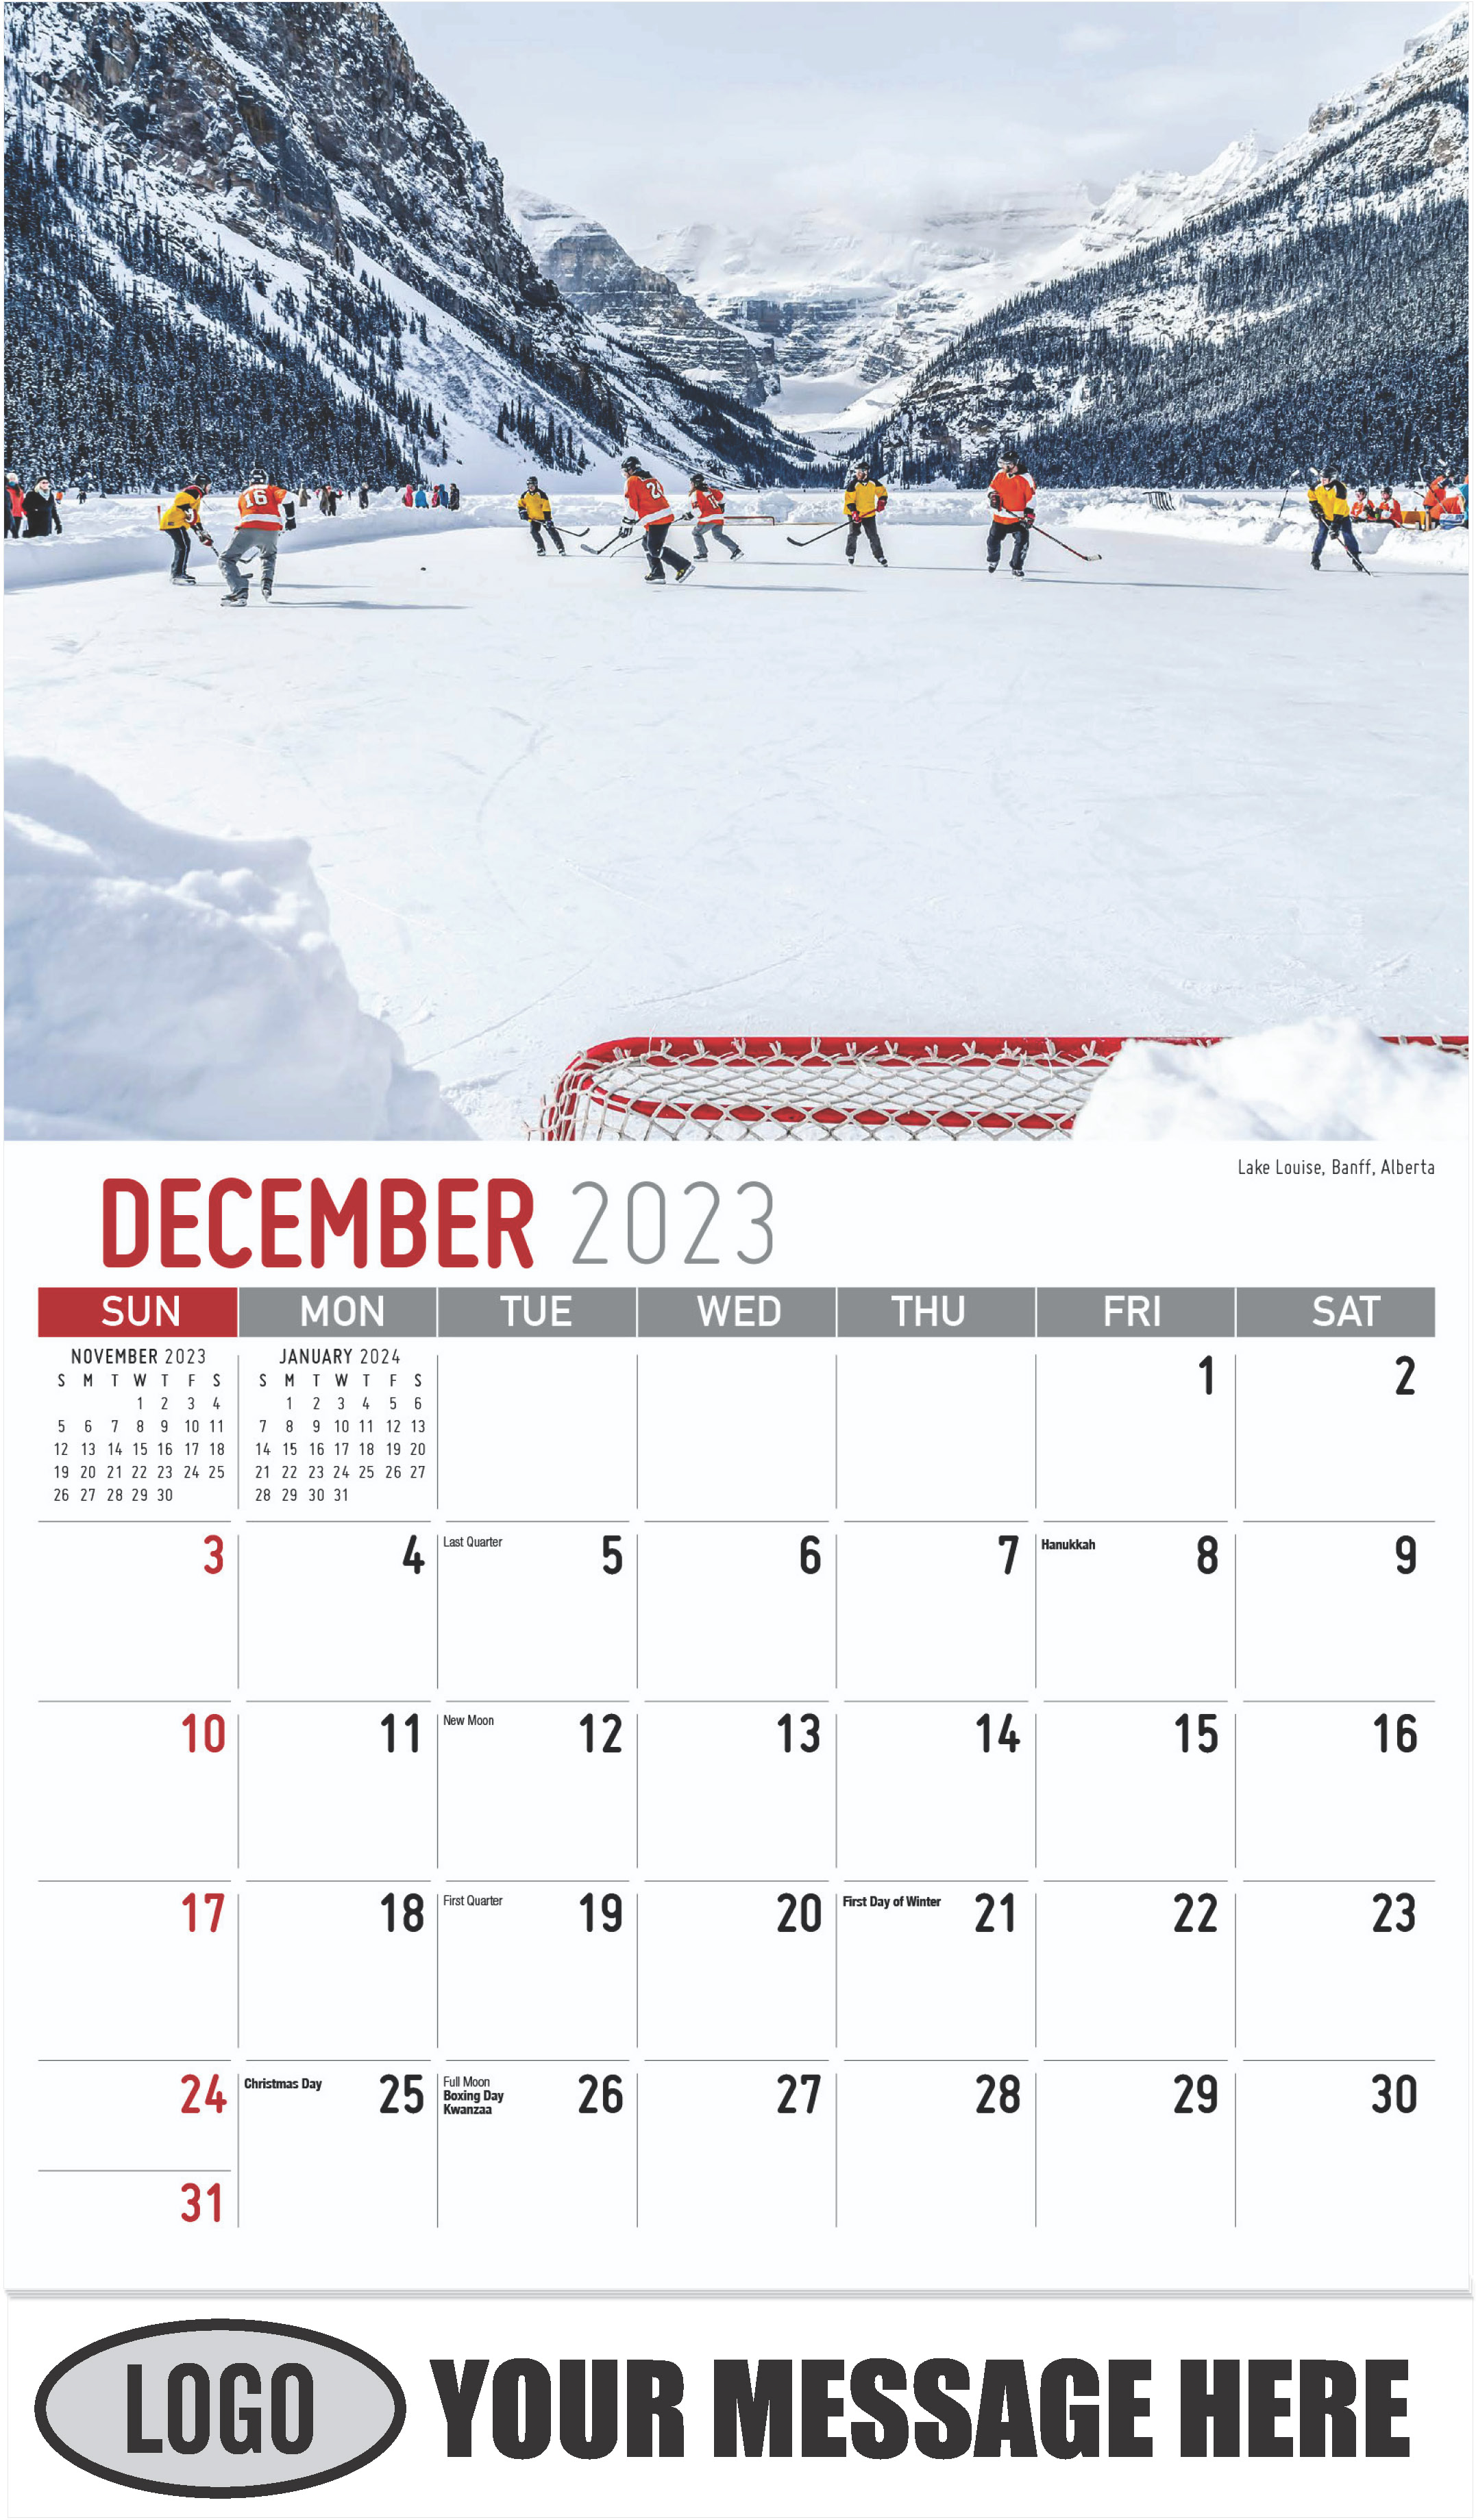 Lake Louise, Banff, Alberta - December 2023 - Scenes of Western Canada 2023 Promotional Calendar